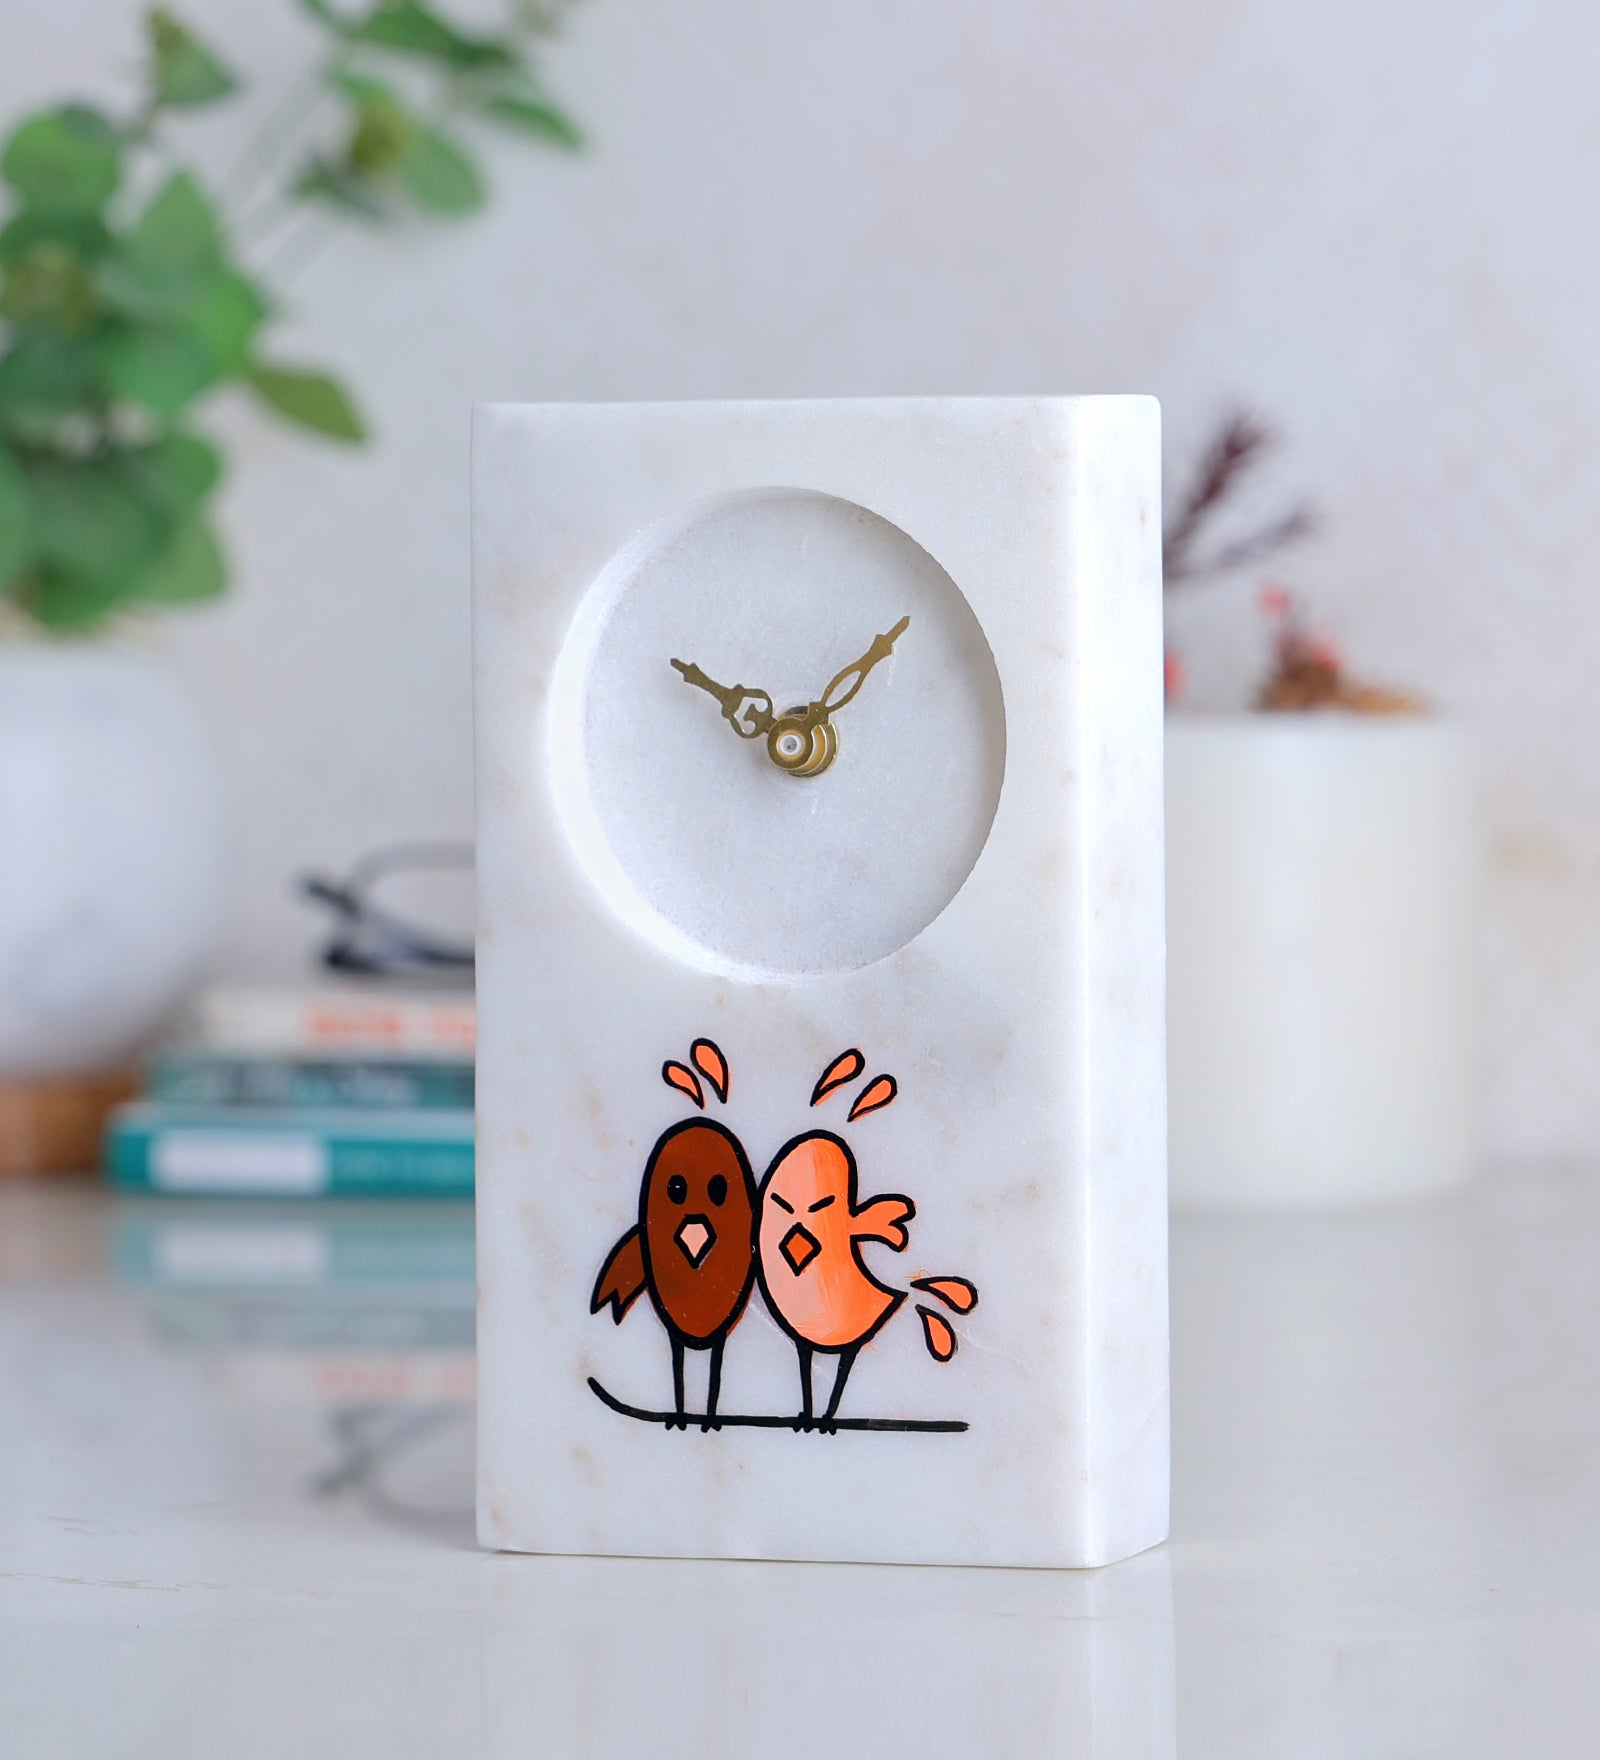 Kiddy Birds Decorative Table Clock